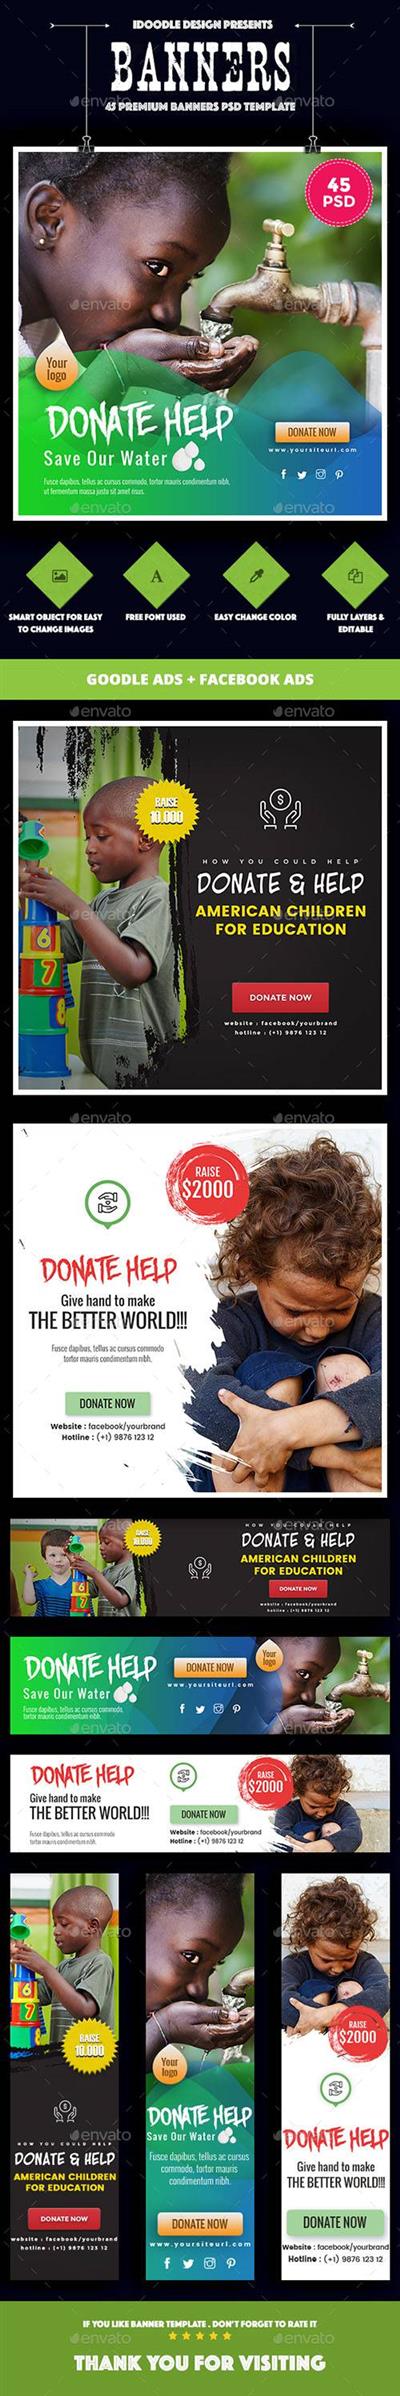 GR - Bundle - Nonprofit - NGO, CharityFundraising Banner Ads [45 PSD] 19850769